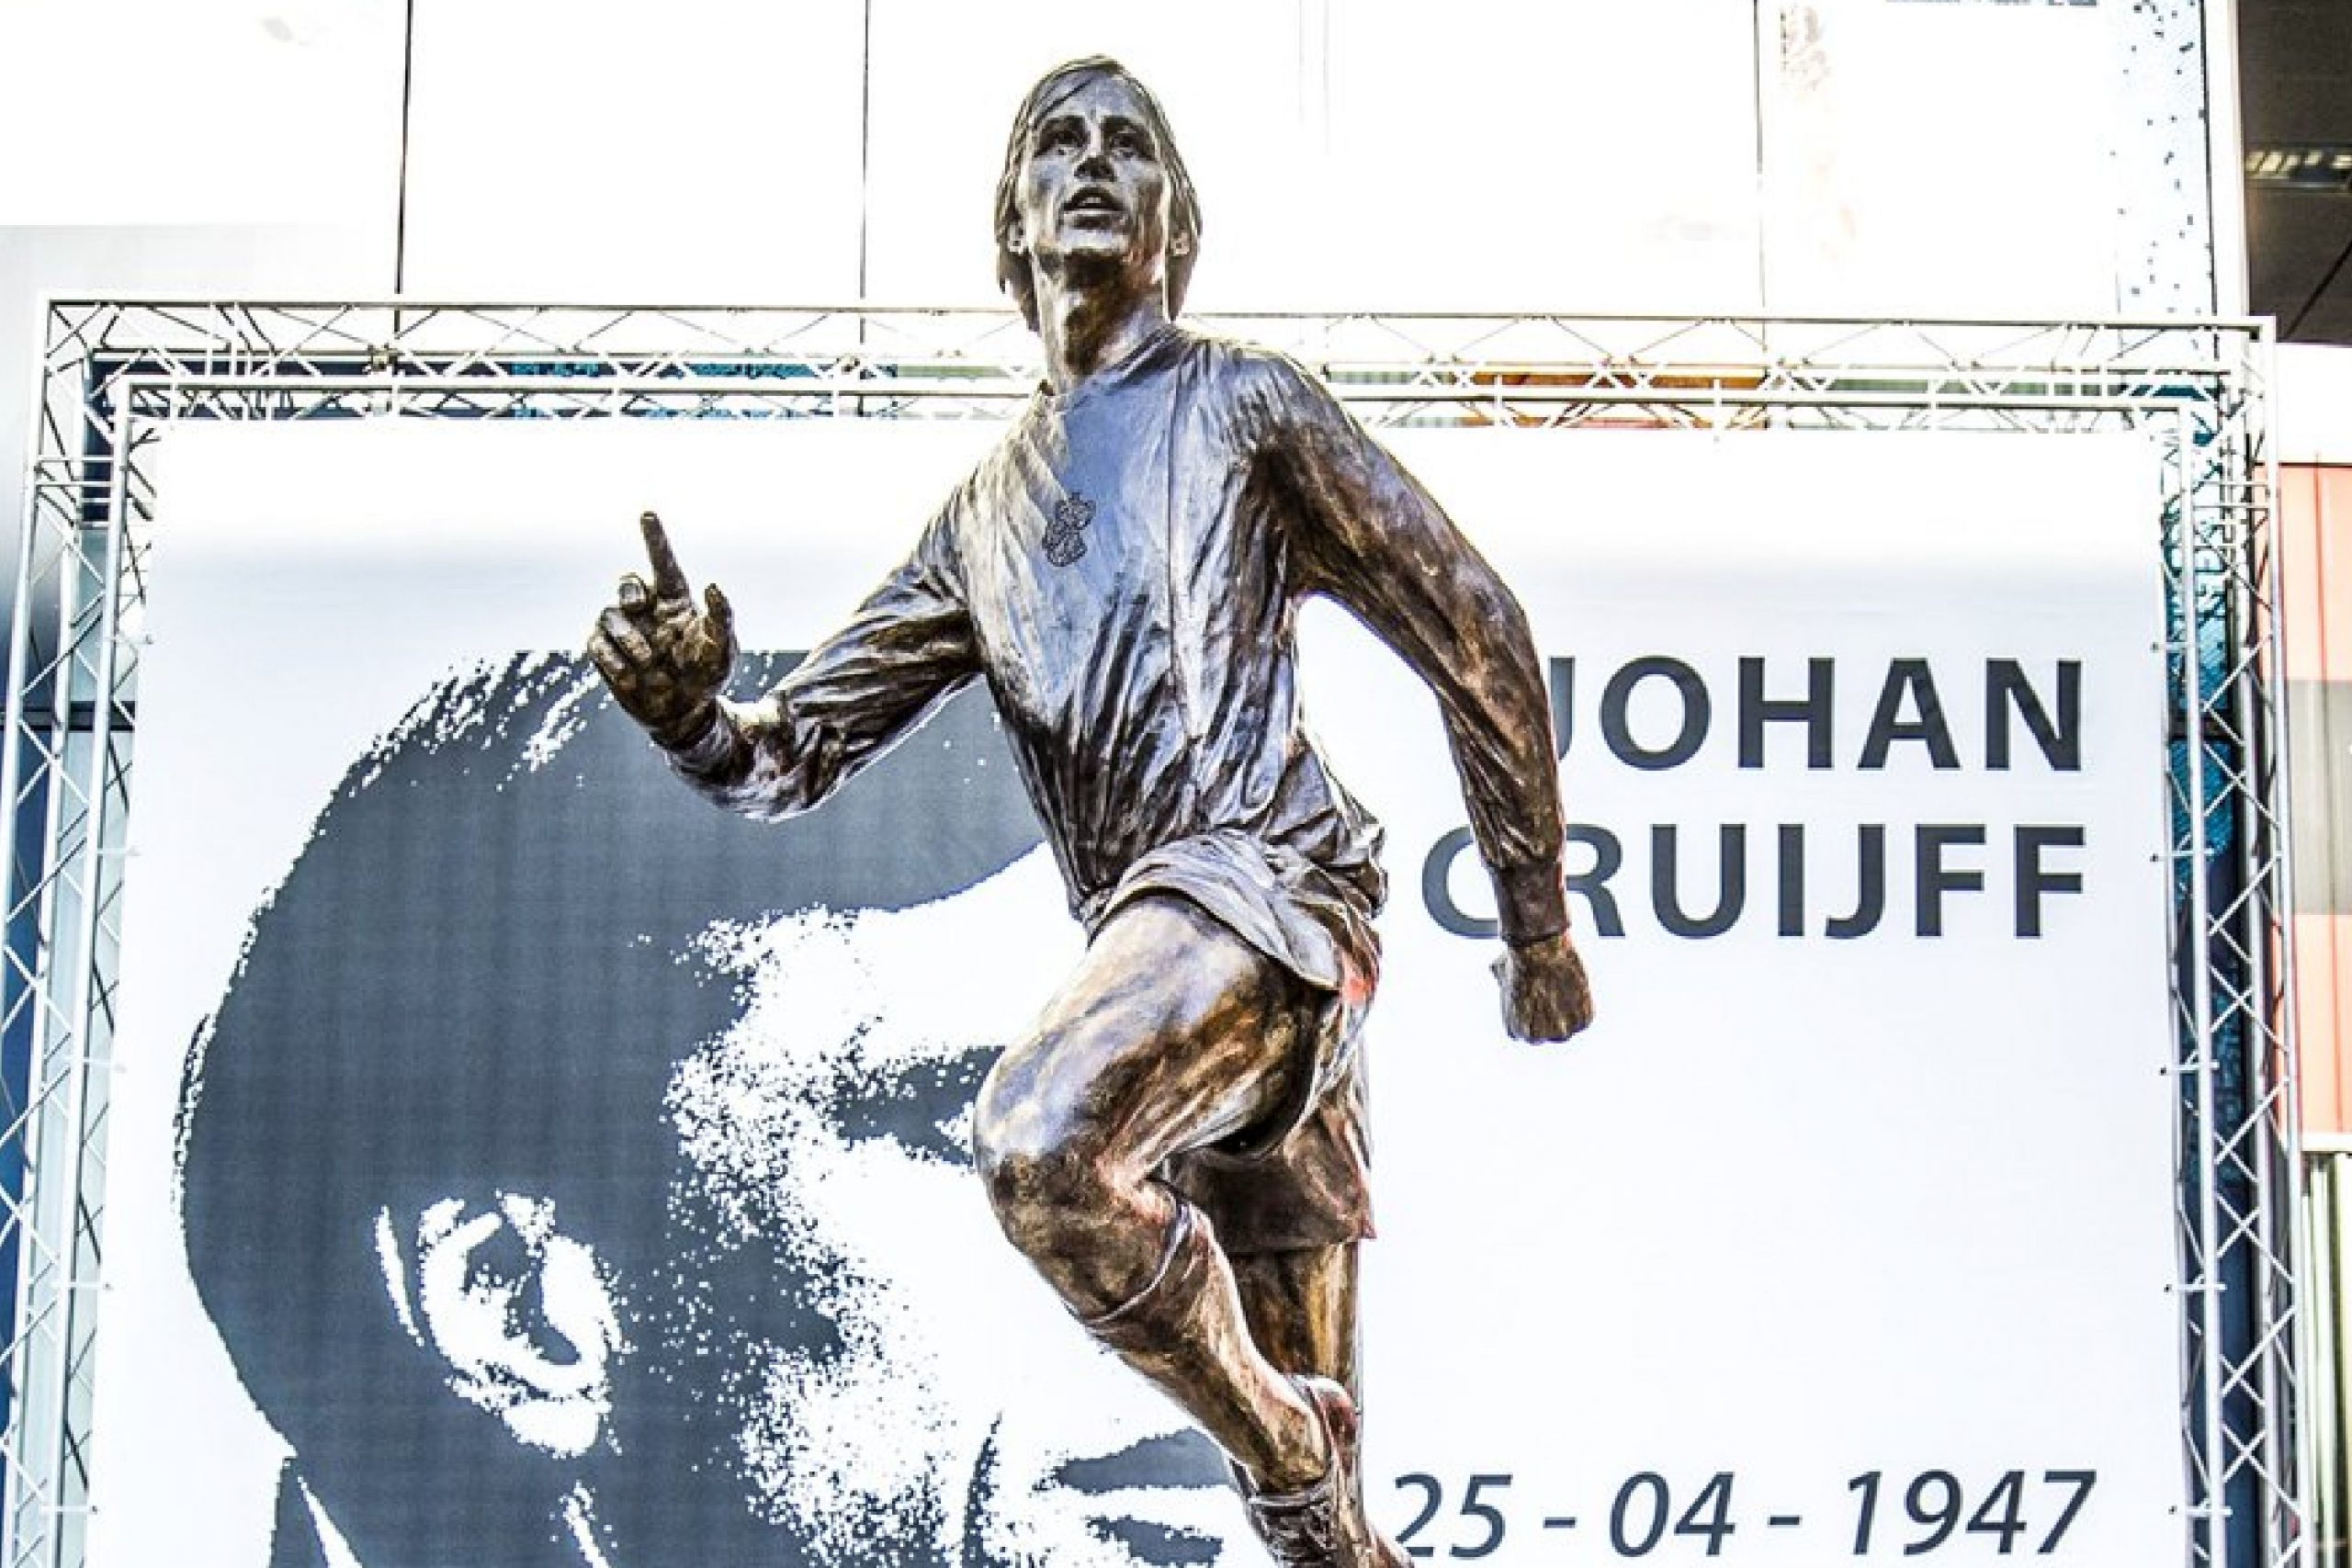 Ajax honour Johan Cruyff with a new statue outside their stadium